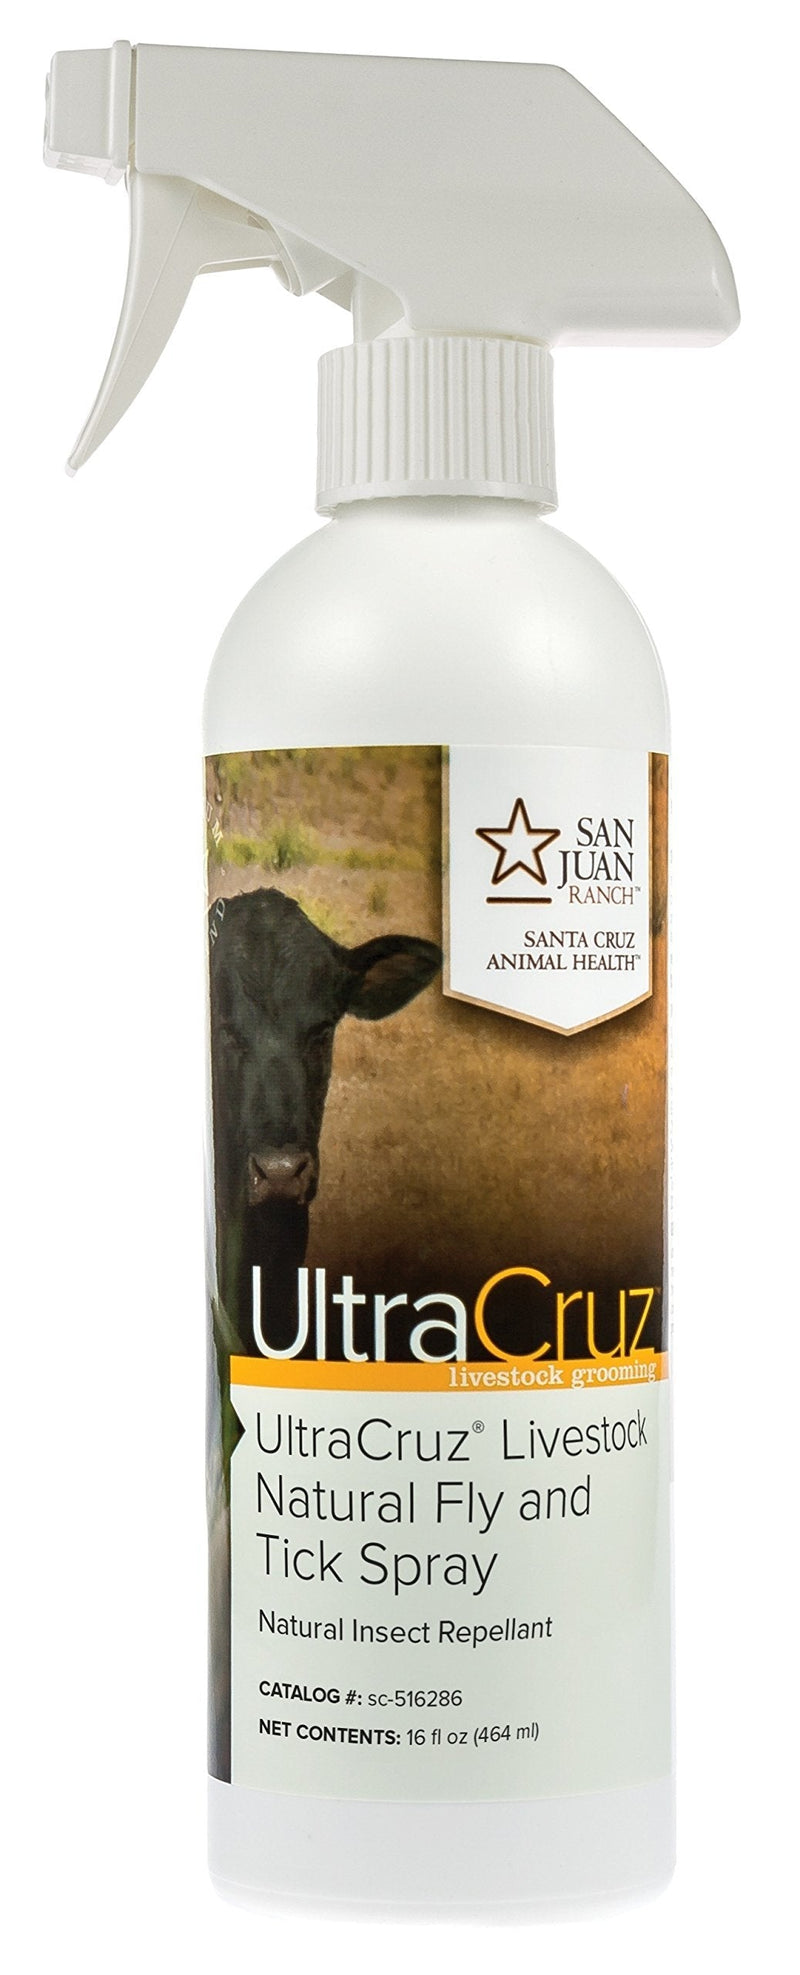 UltraCruz Livestock Natural Fly and Tick Spray, 16 oz,sc-516286 - PawsPlanet Australia